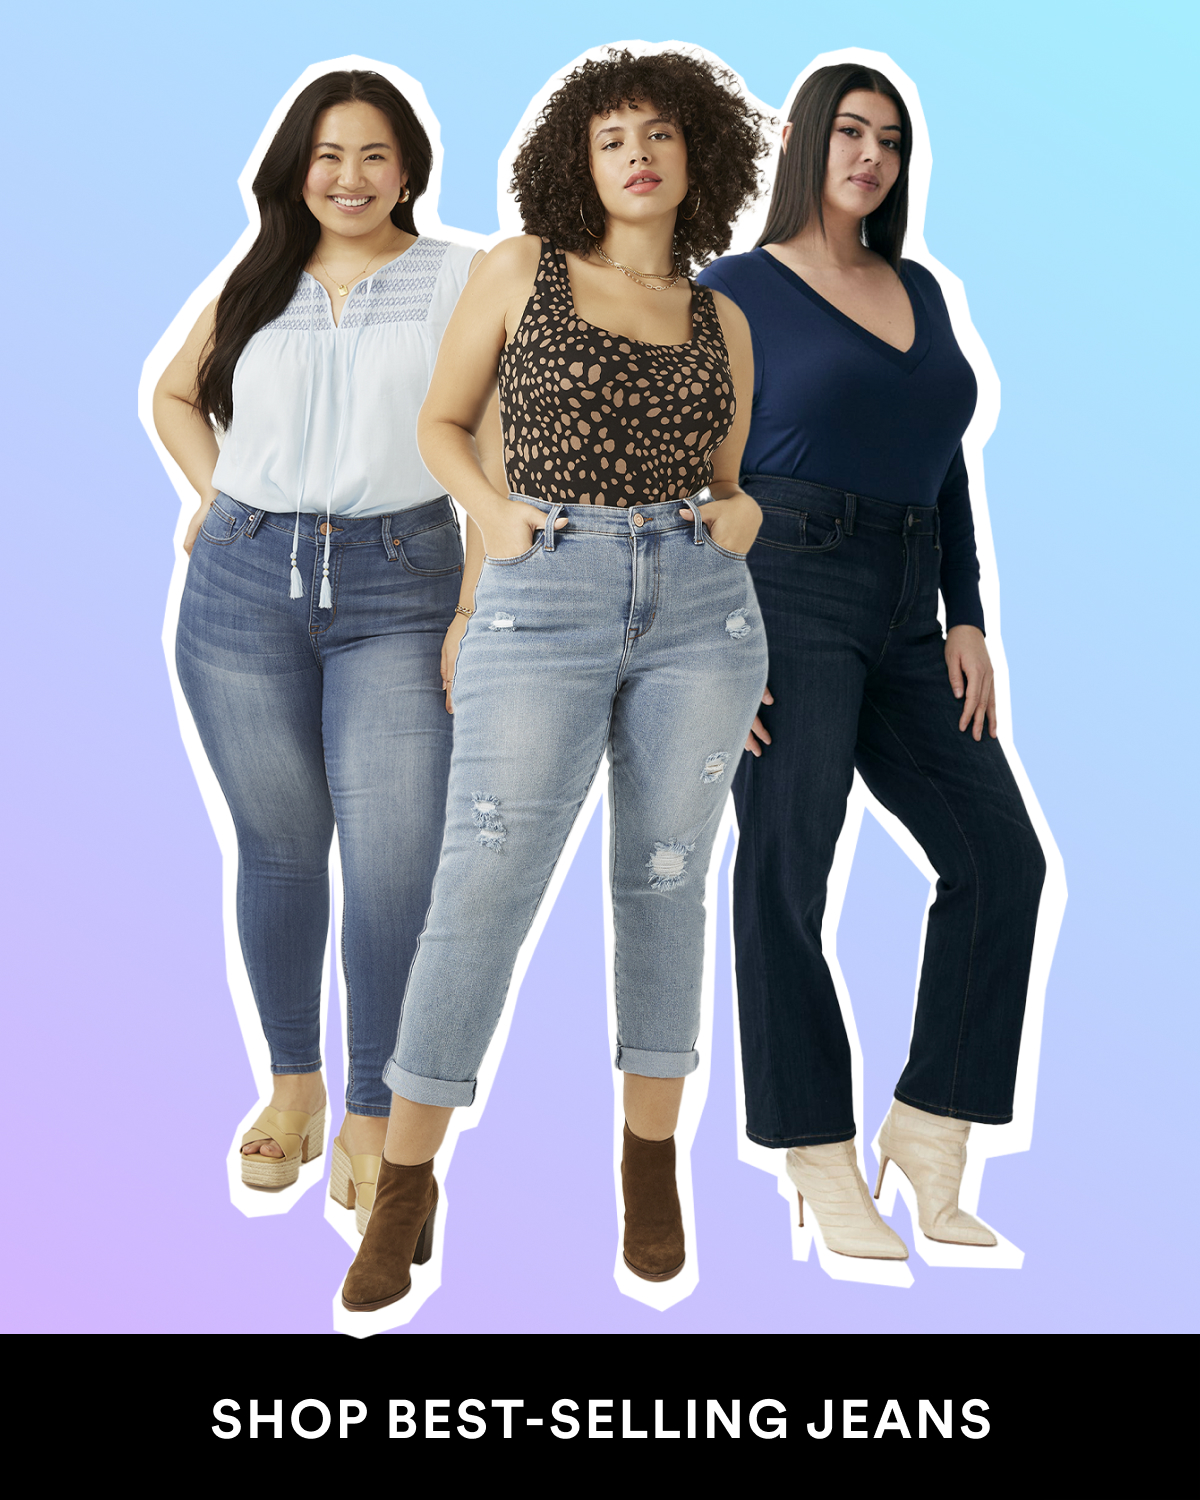 Seven7 Jeans Women's High Rise Jeggings Black Size 22W